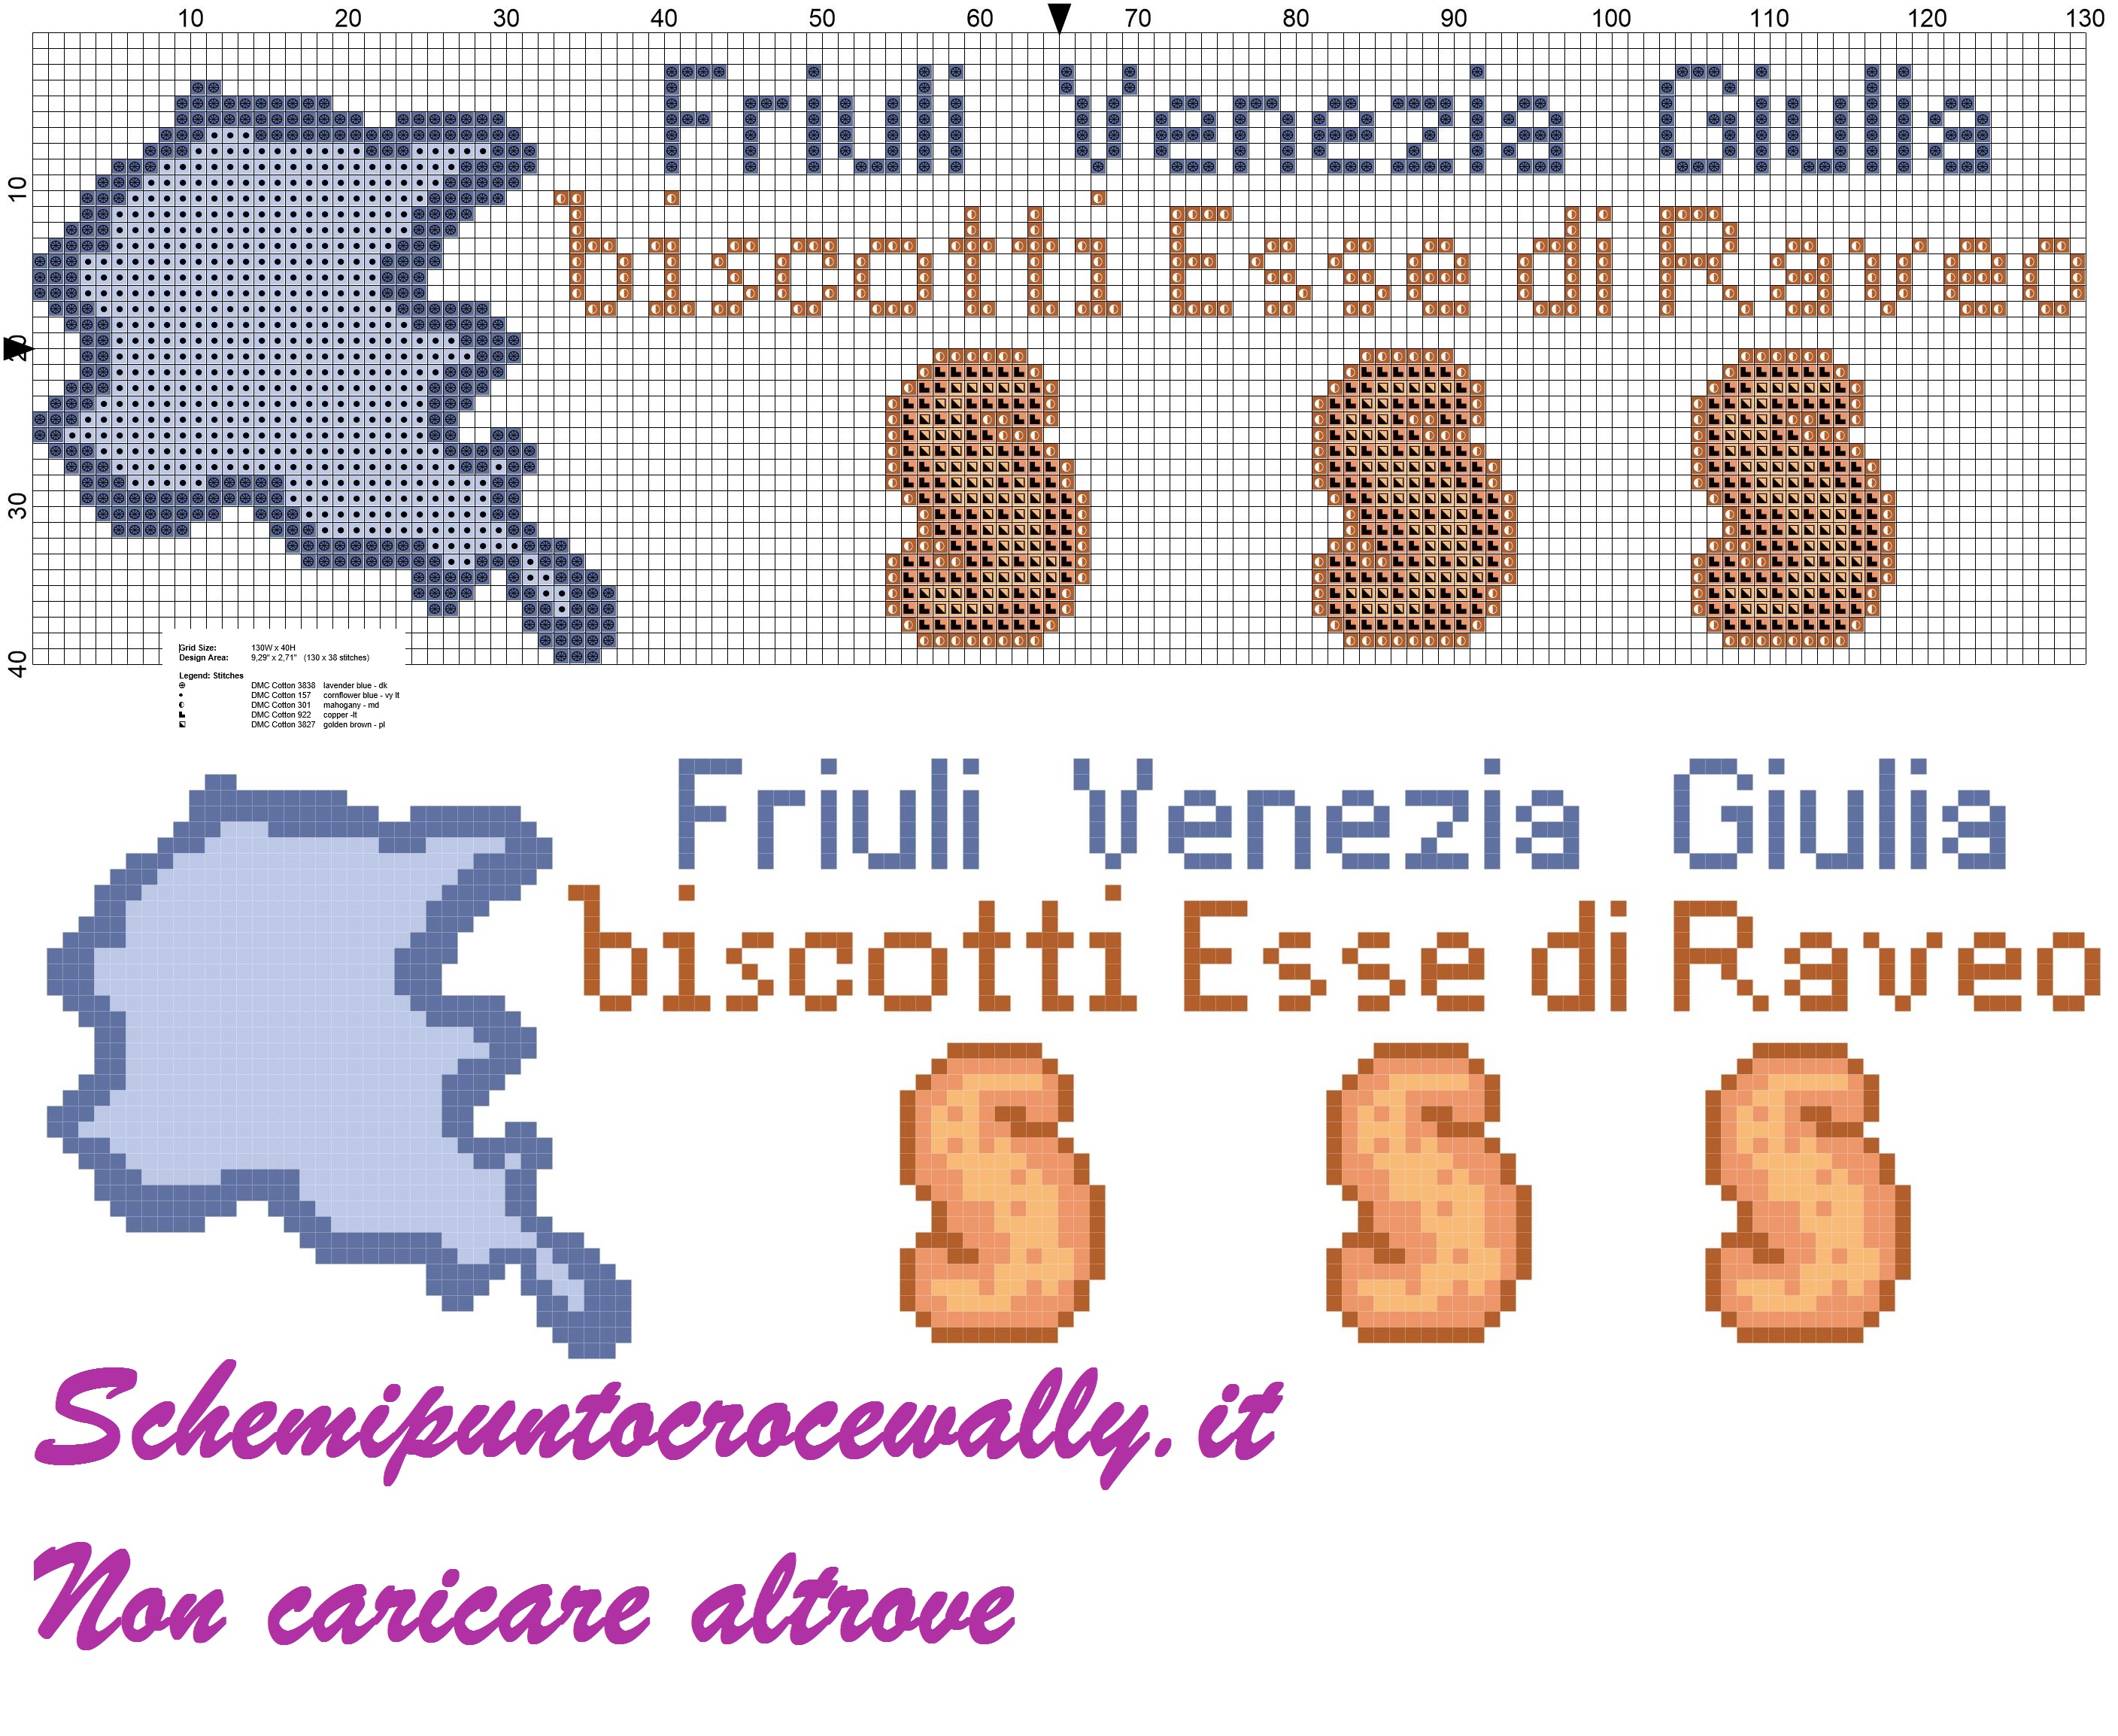 asciugapiatti firuli venezia giulia con biscotti